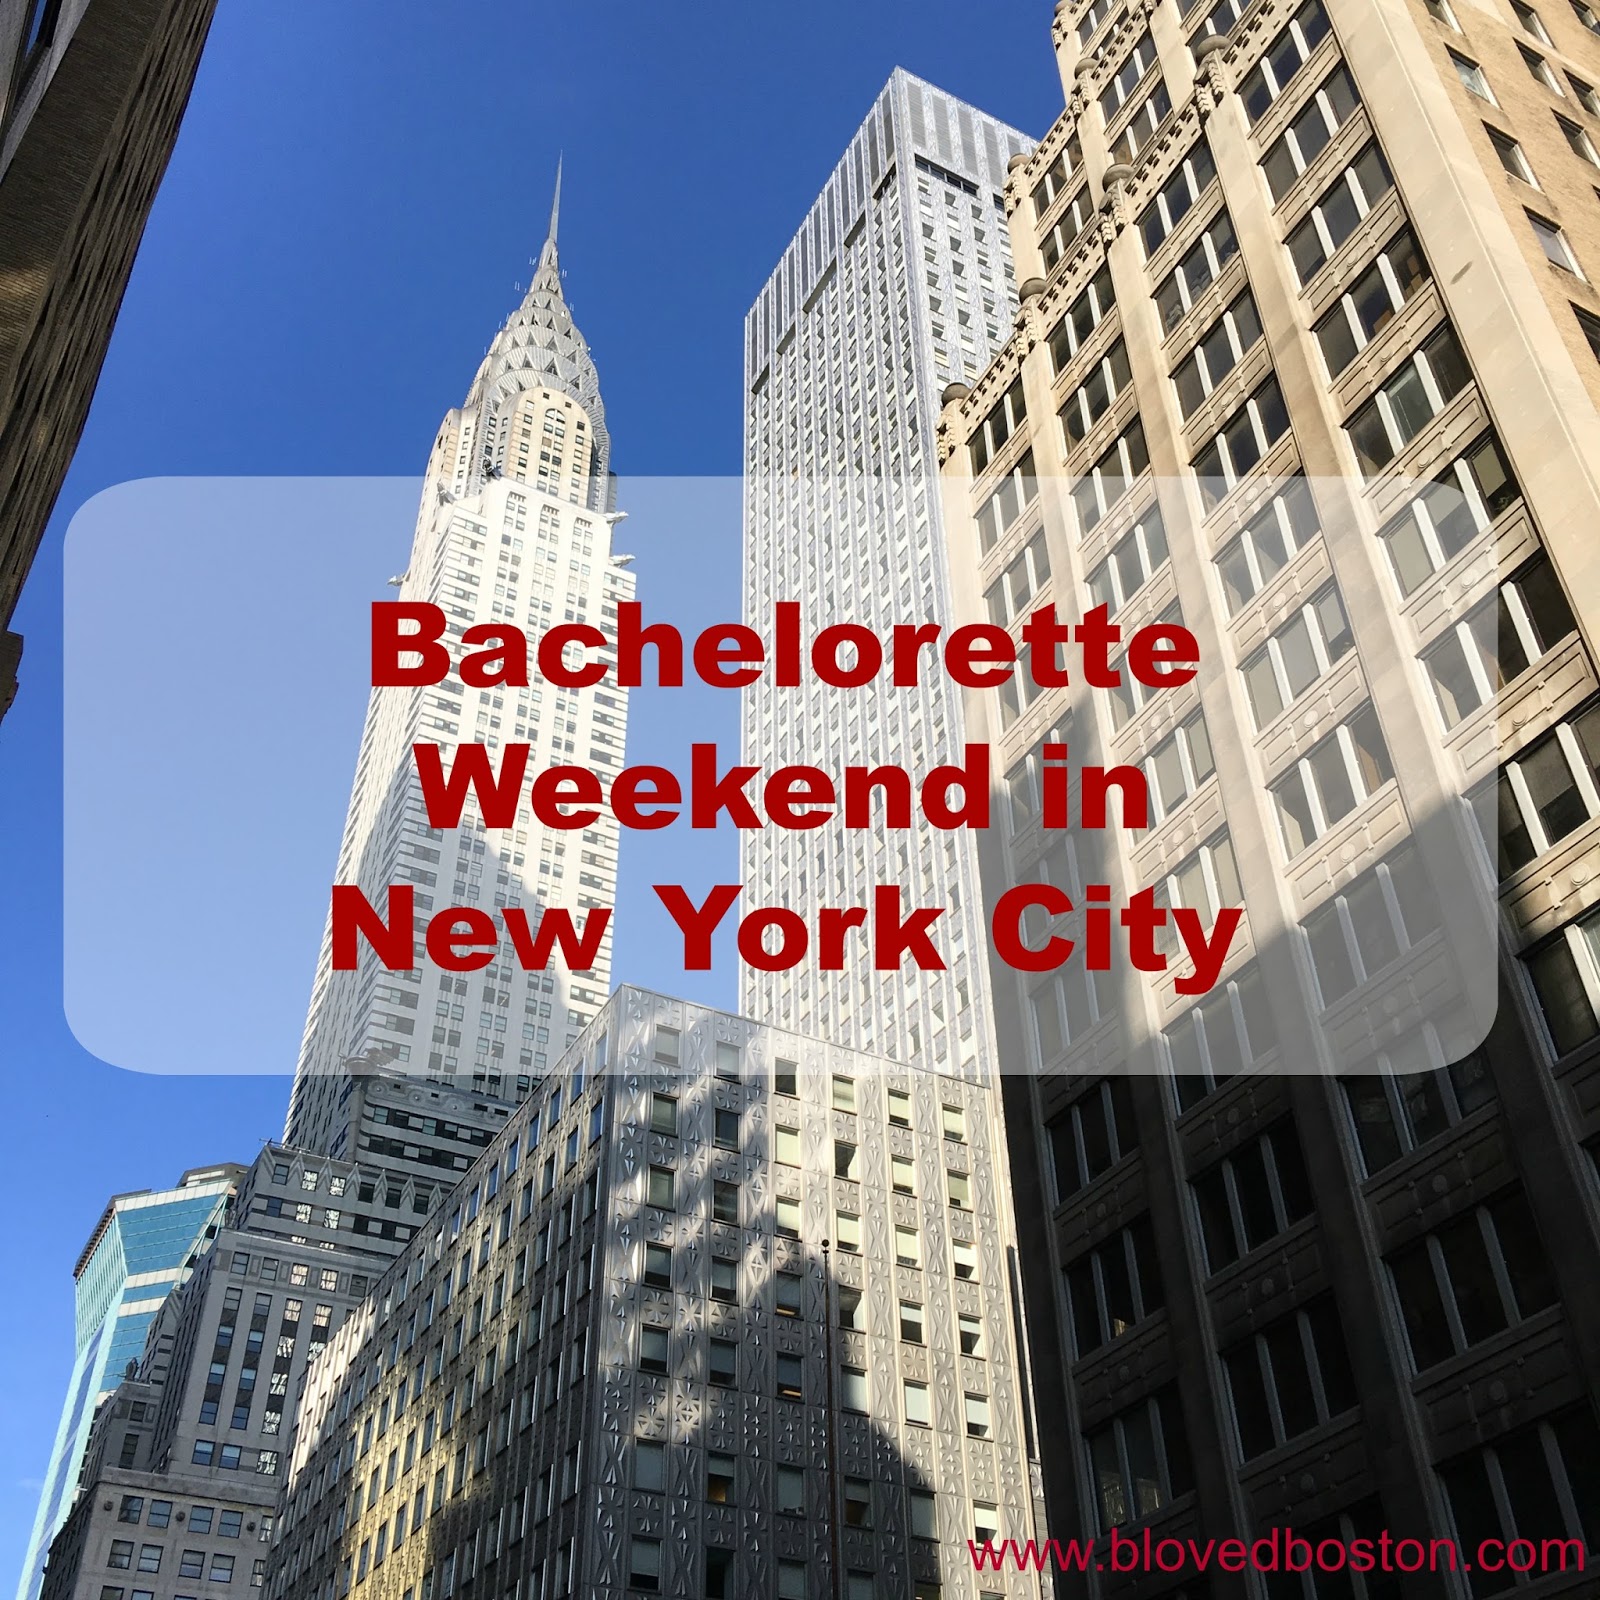 A Bachelorette Weekend in NYC